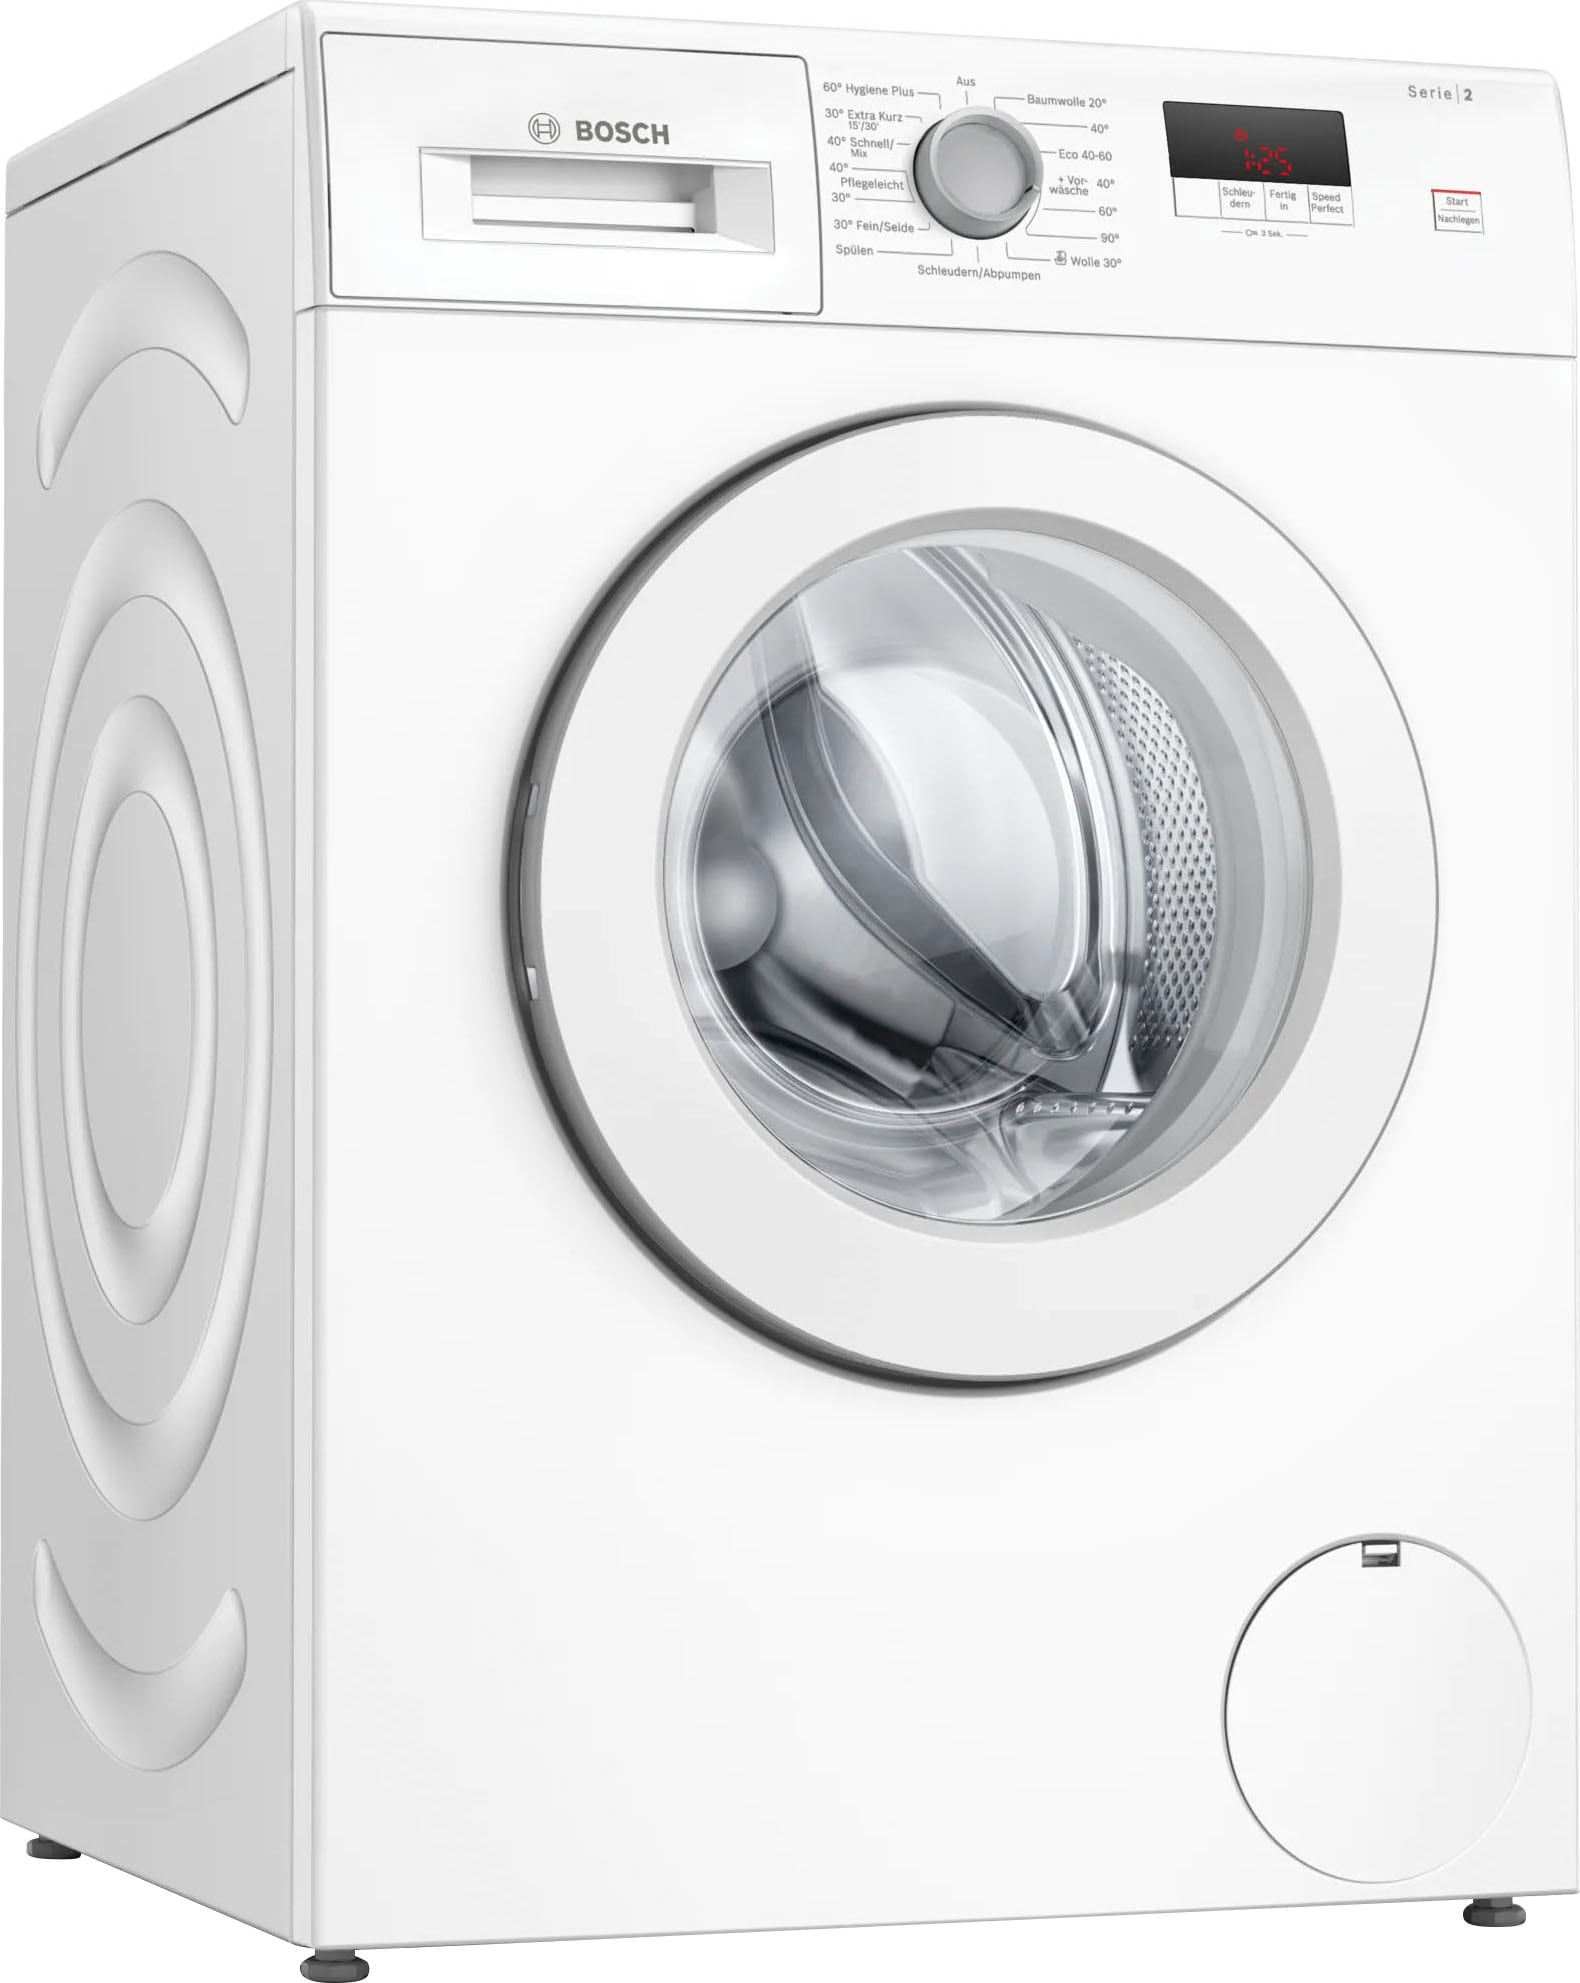 BOSCH Waschmaschine »WAJ28023«, Serie kg, 2, 1400 WAJ28023, U/min online kaufen 7